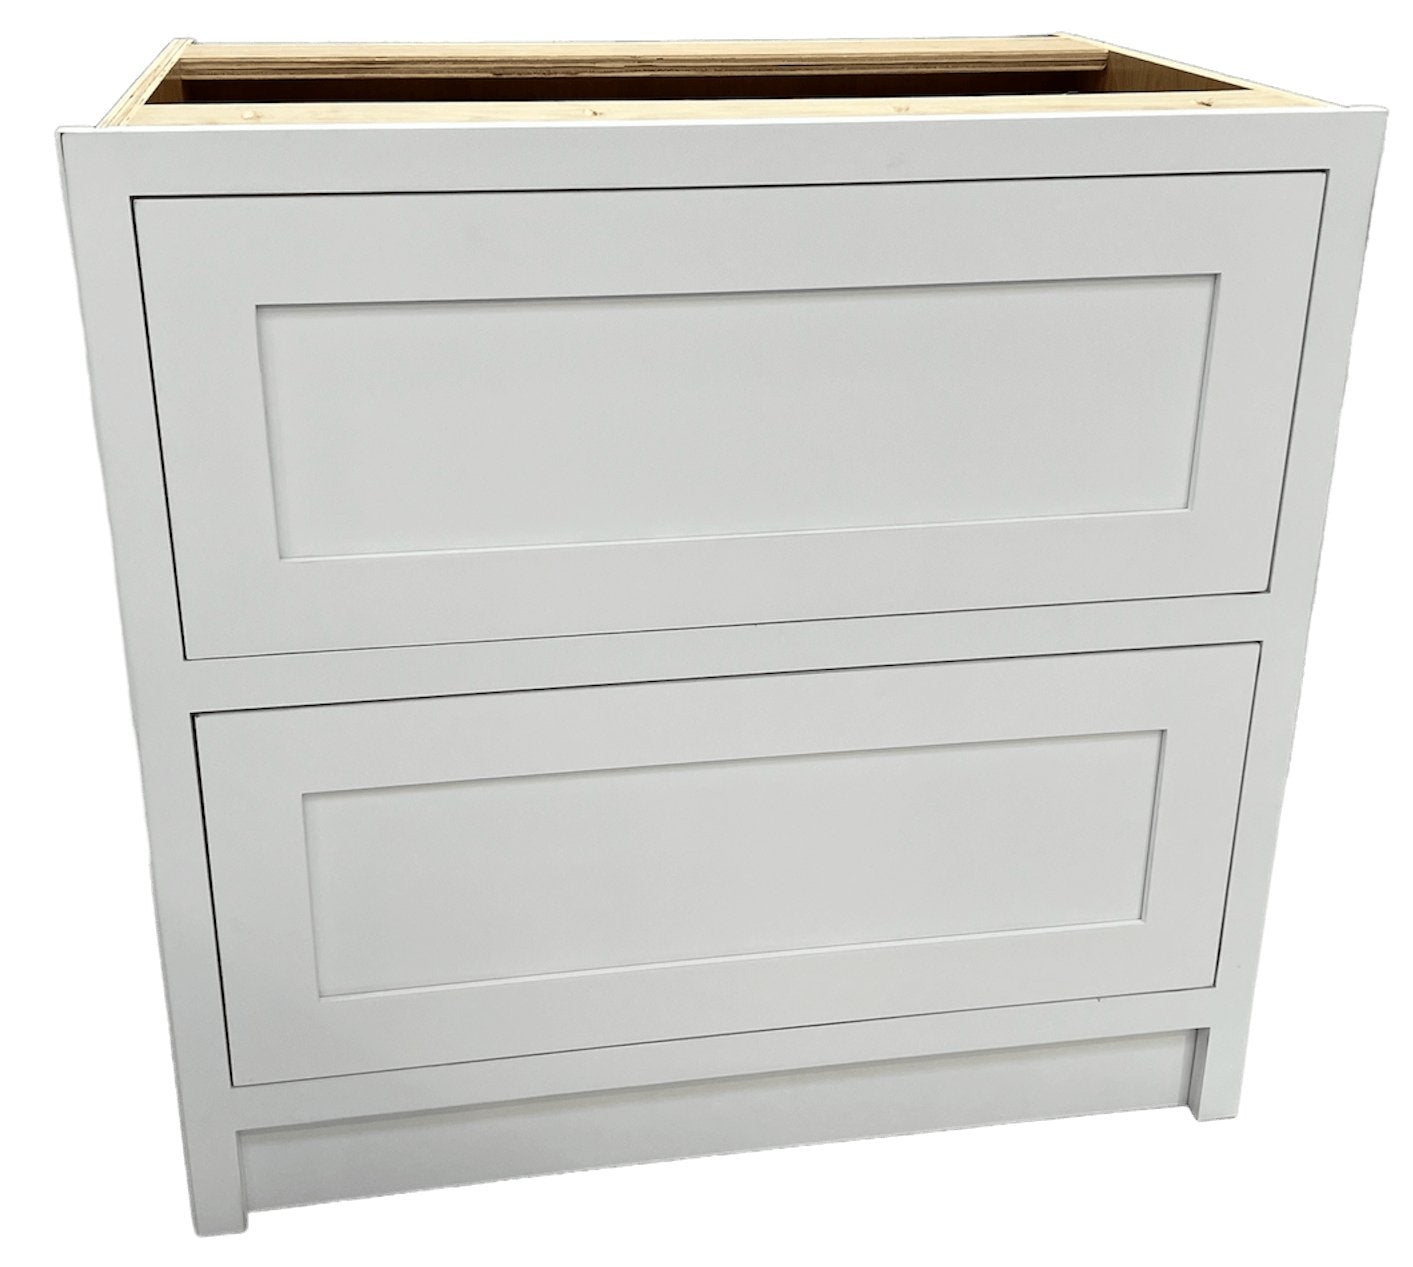 BD2 800 - 800mm 2 drawer base plus a hidden internal drawer - Classic Kitchens Direct